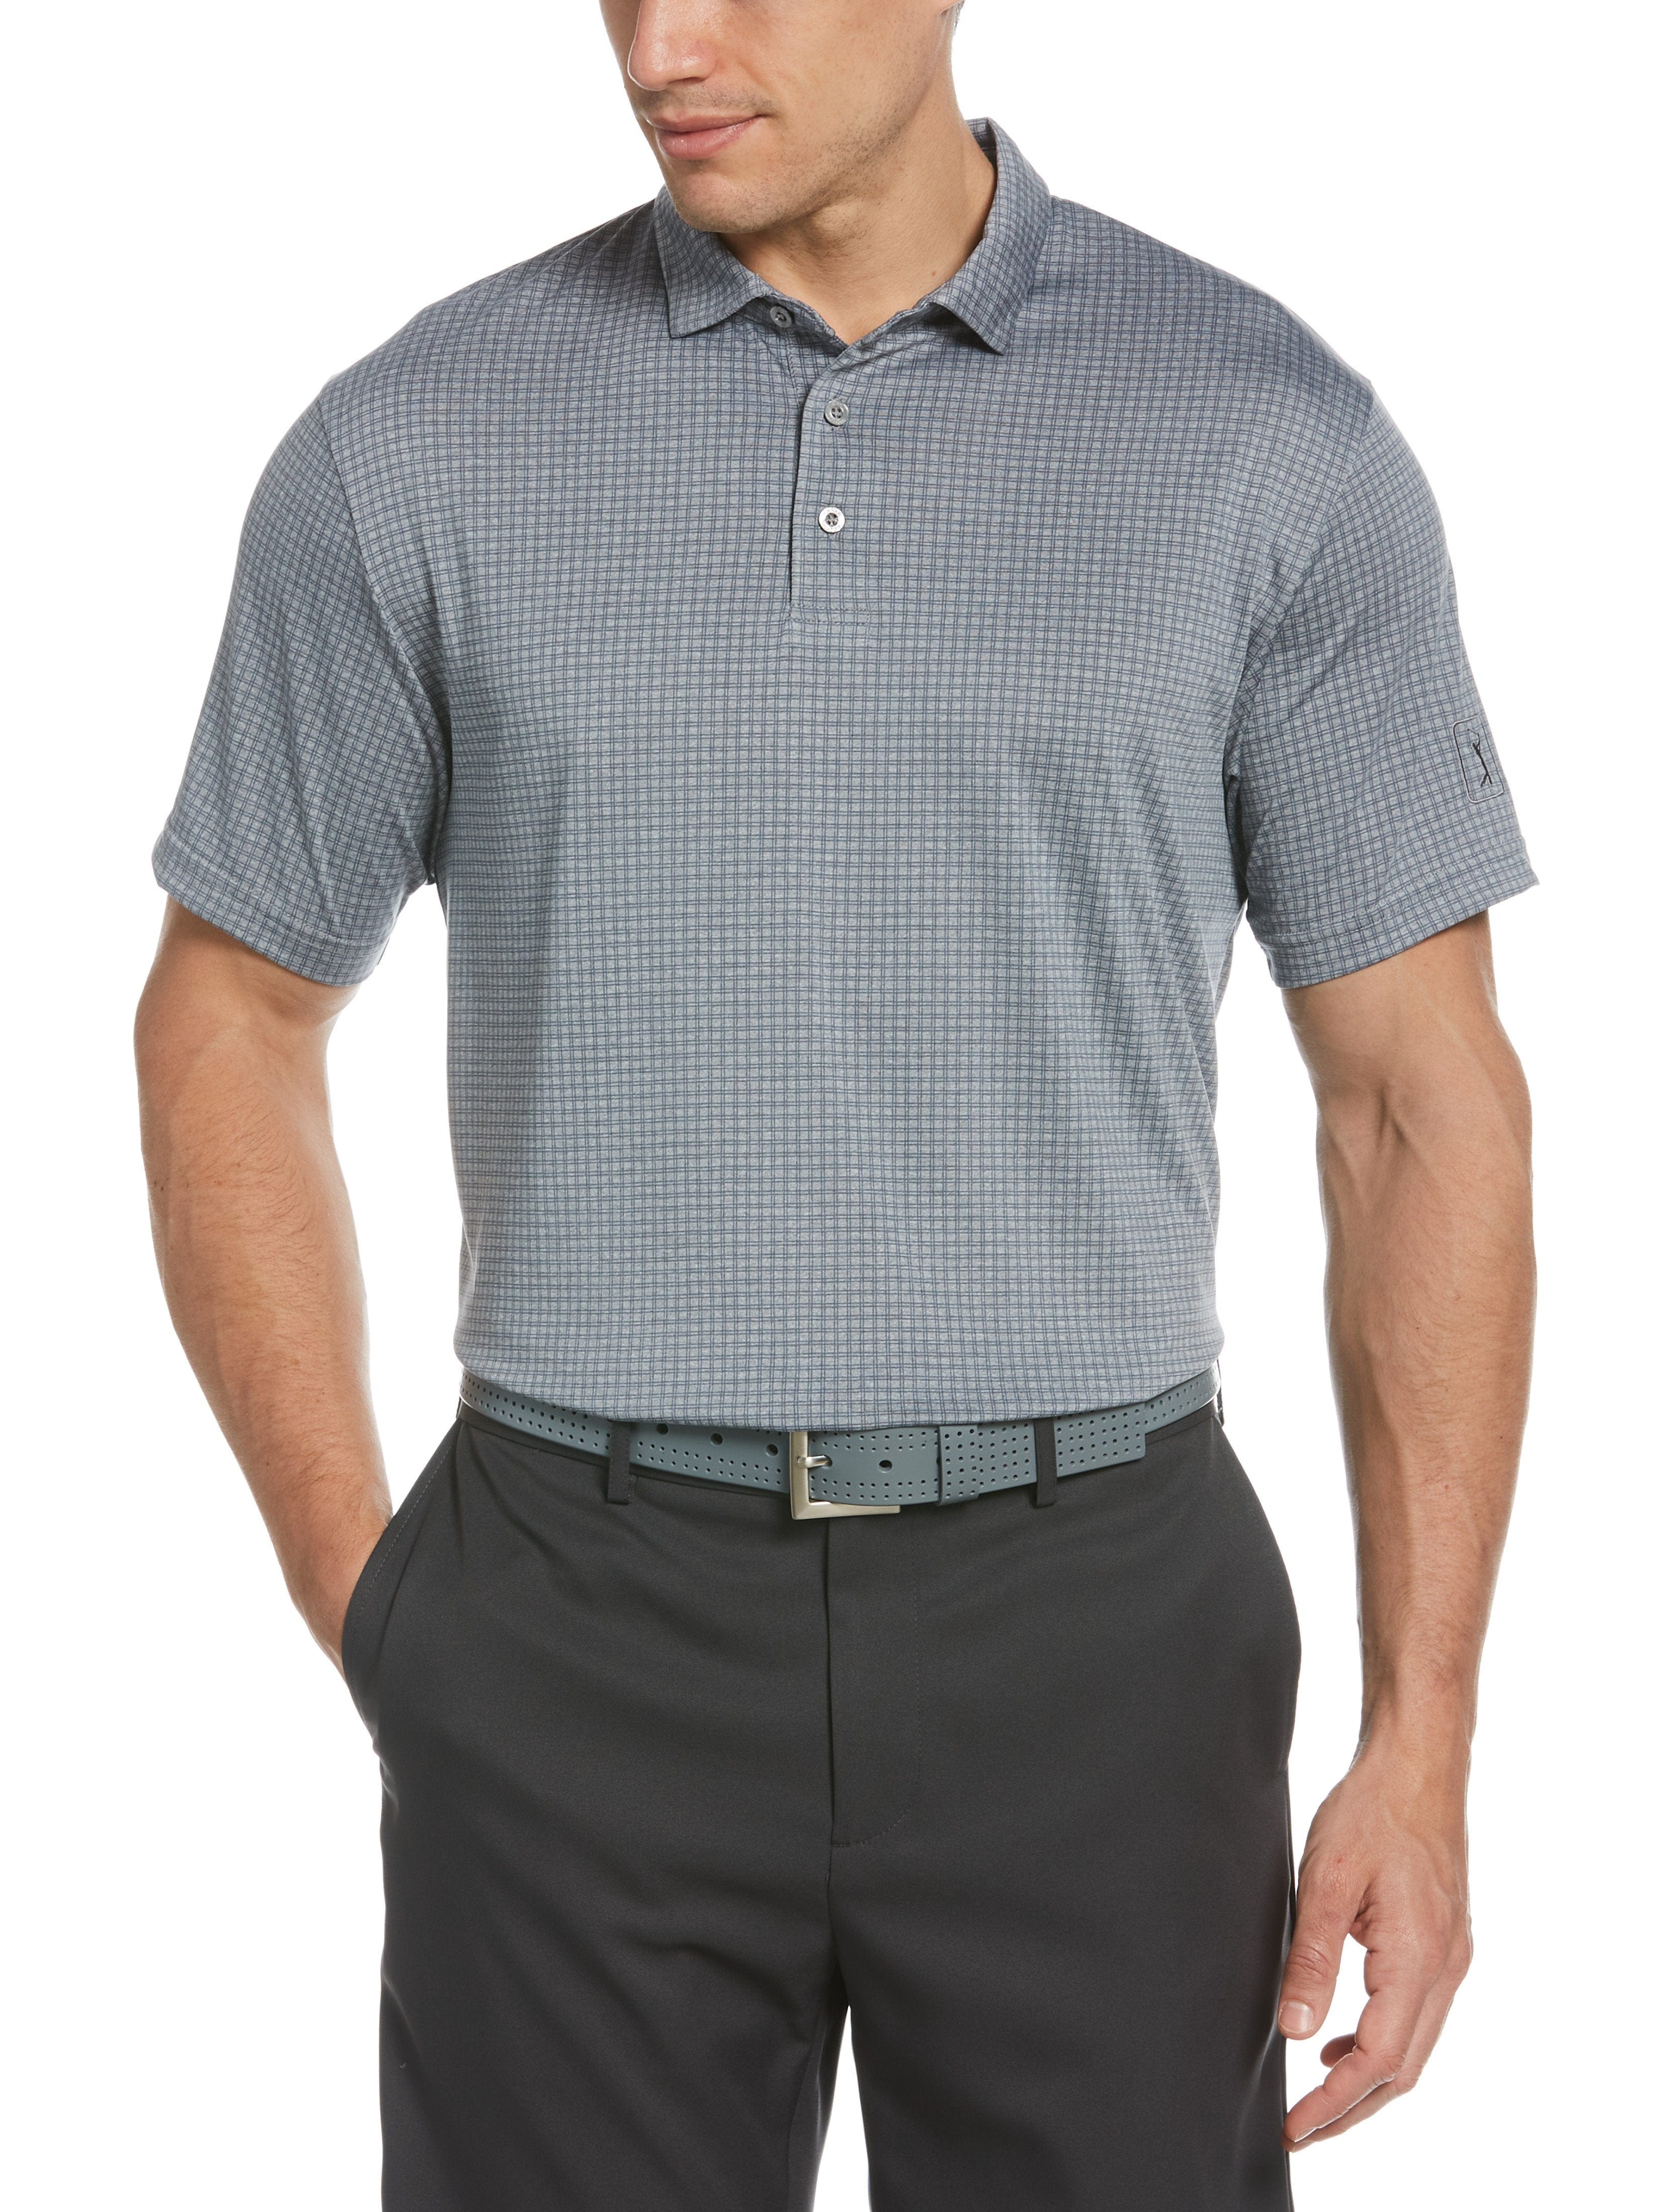 PGA TOUR Apparel Mens Mini Windowpane Heathered Golf Polo Shirt, Size Large, Tradewinds Heather Gray, 100% Polyester | Golf Apparel Shop